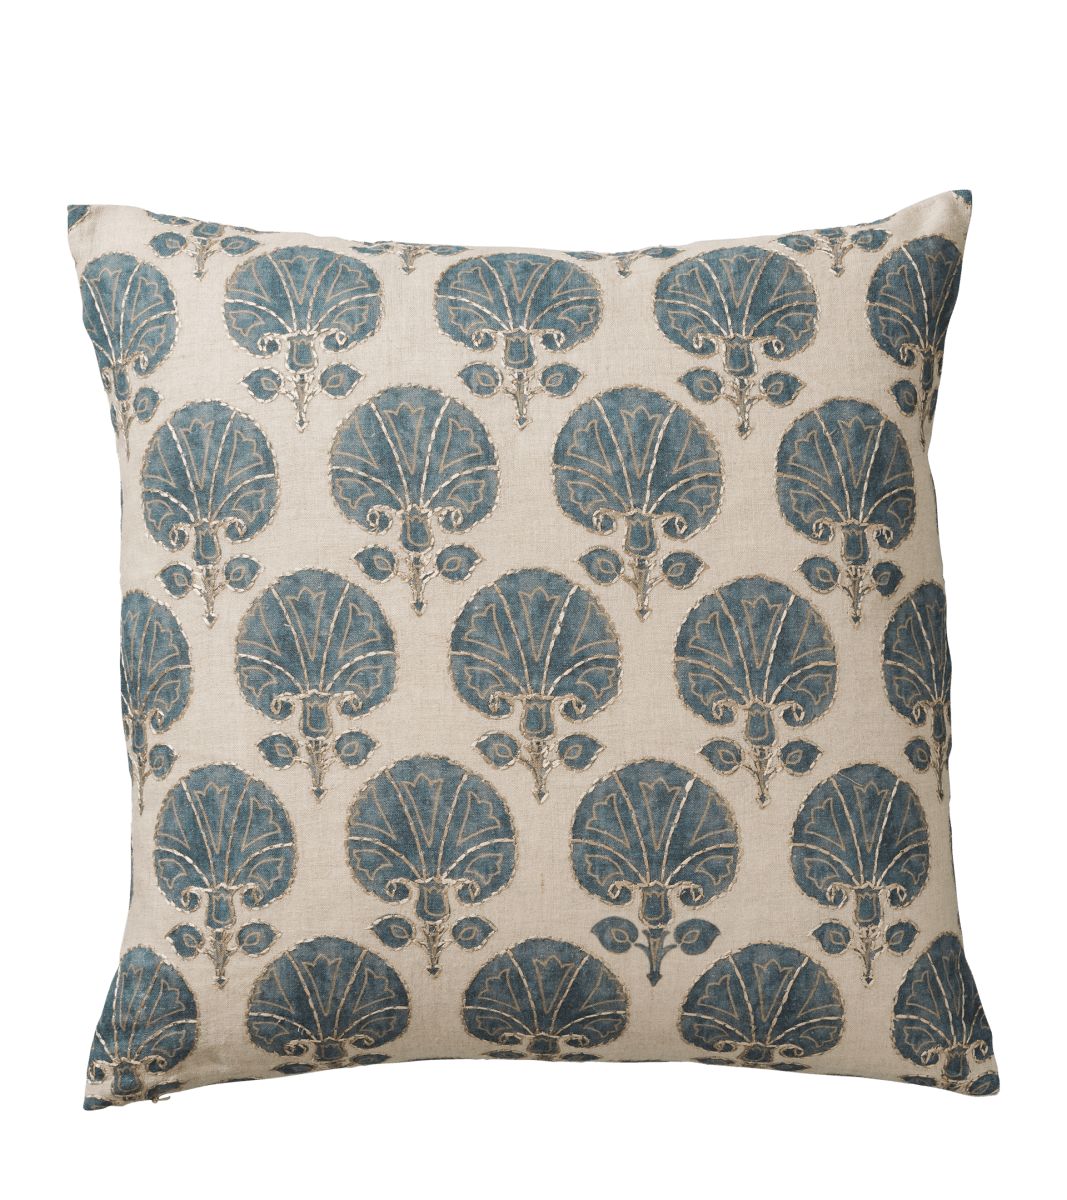 Kabibi Shell Pillow Cover - Gray/Blue | OKA US